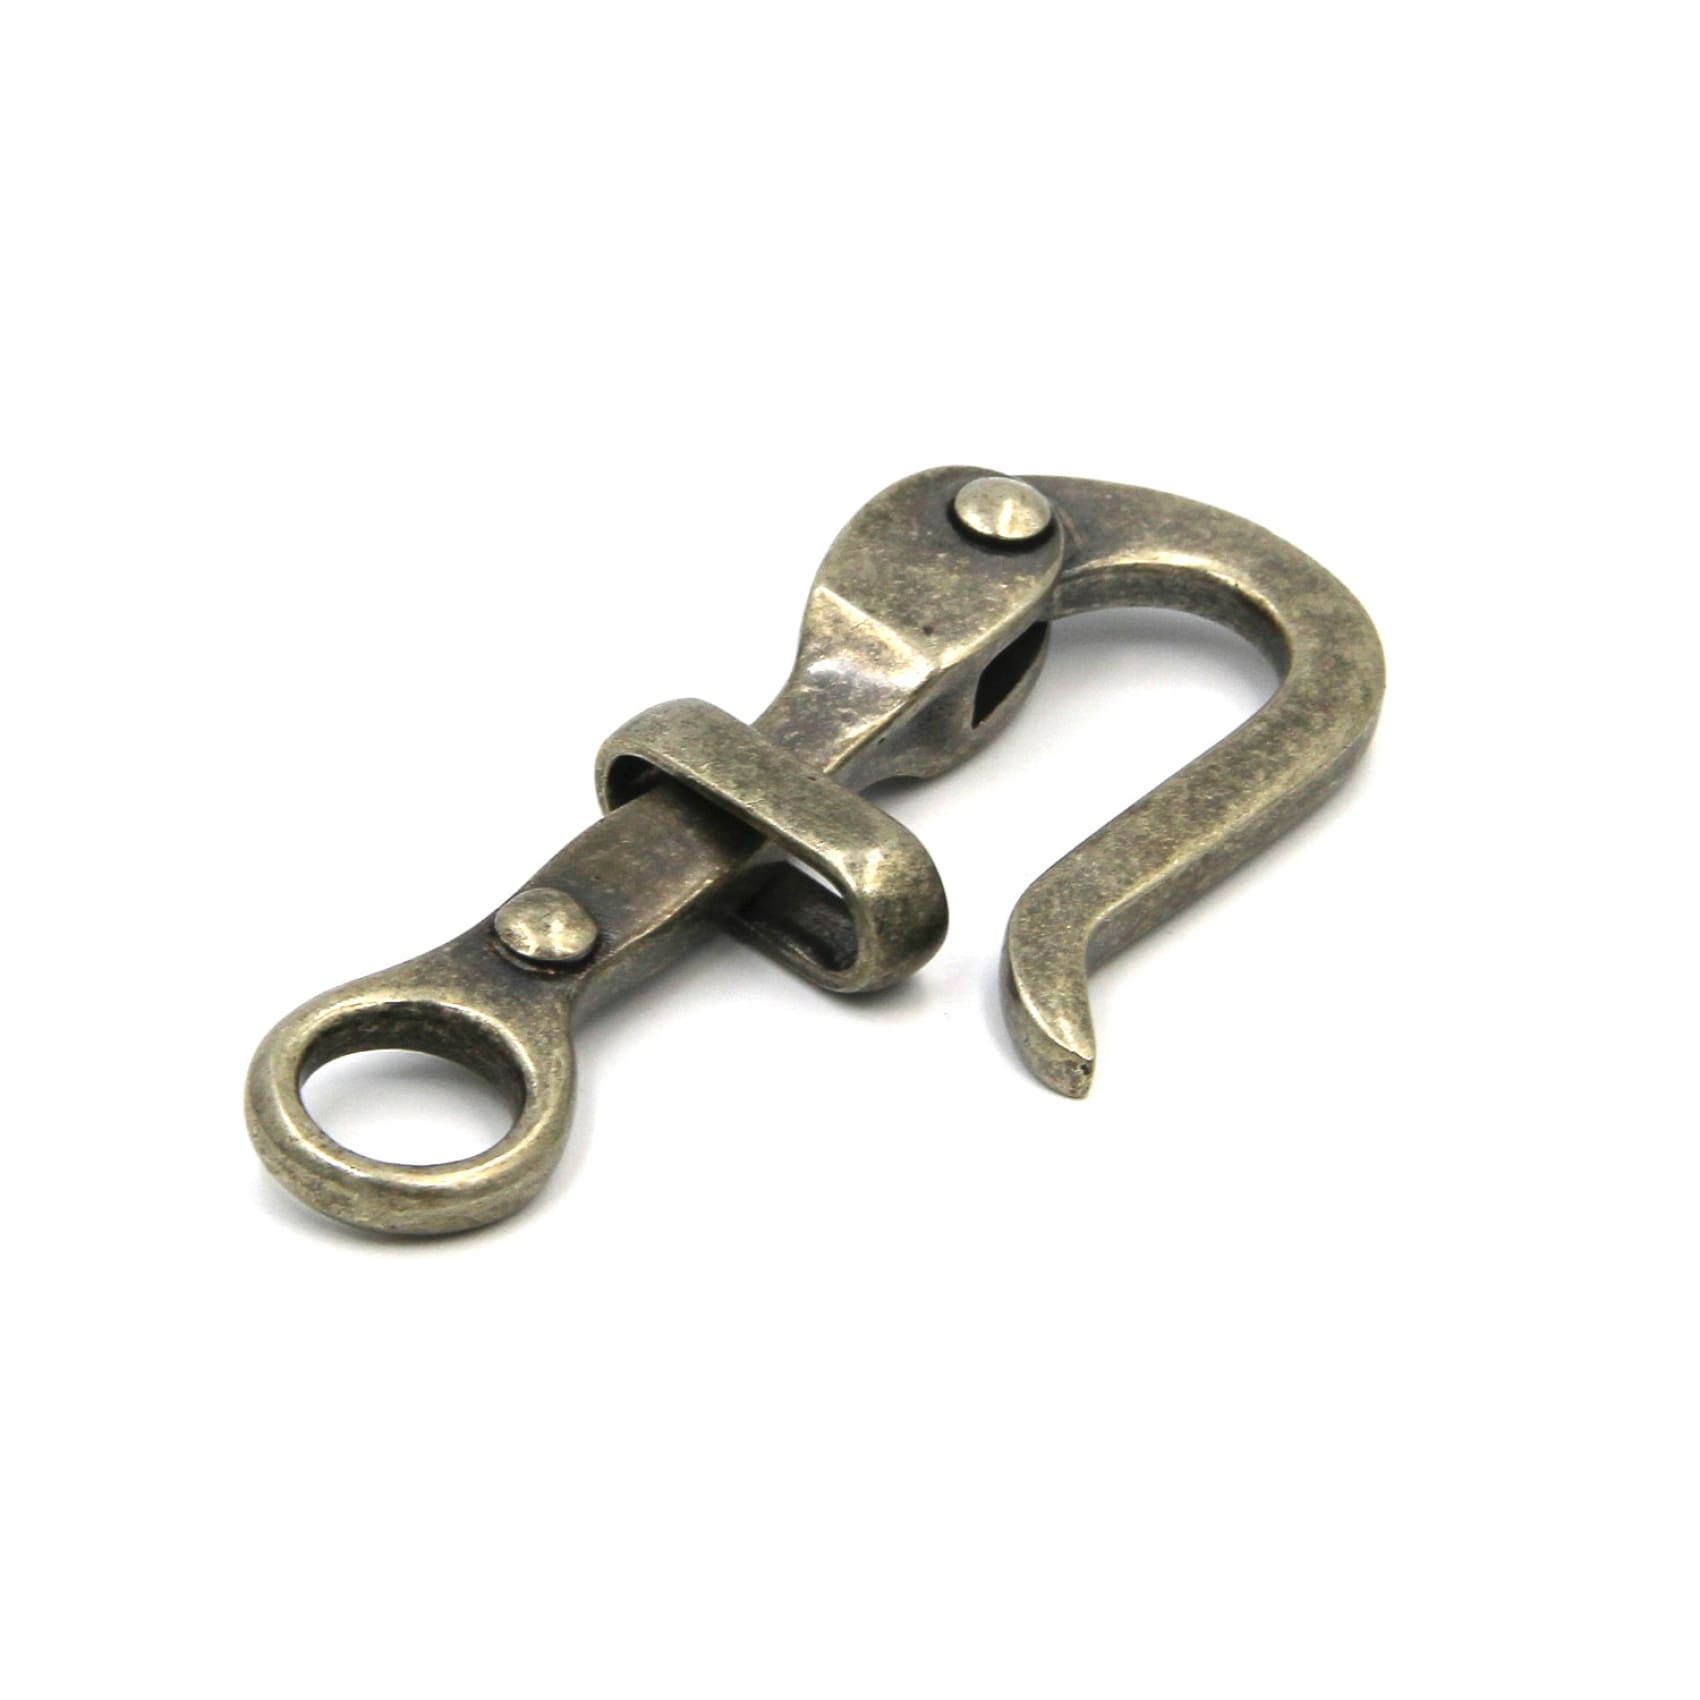 Old Silver Pirate Hook Belt Fastener Buckle Potong Metal Field Exclusive Buckle - 1pcs - Belt Buckles